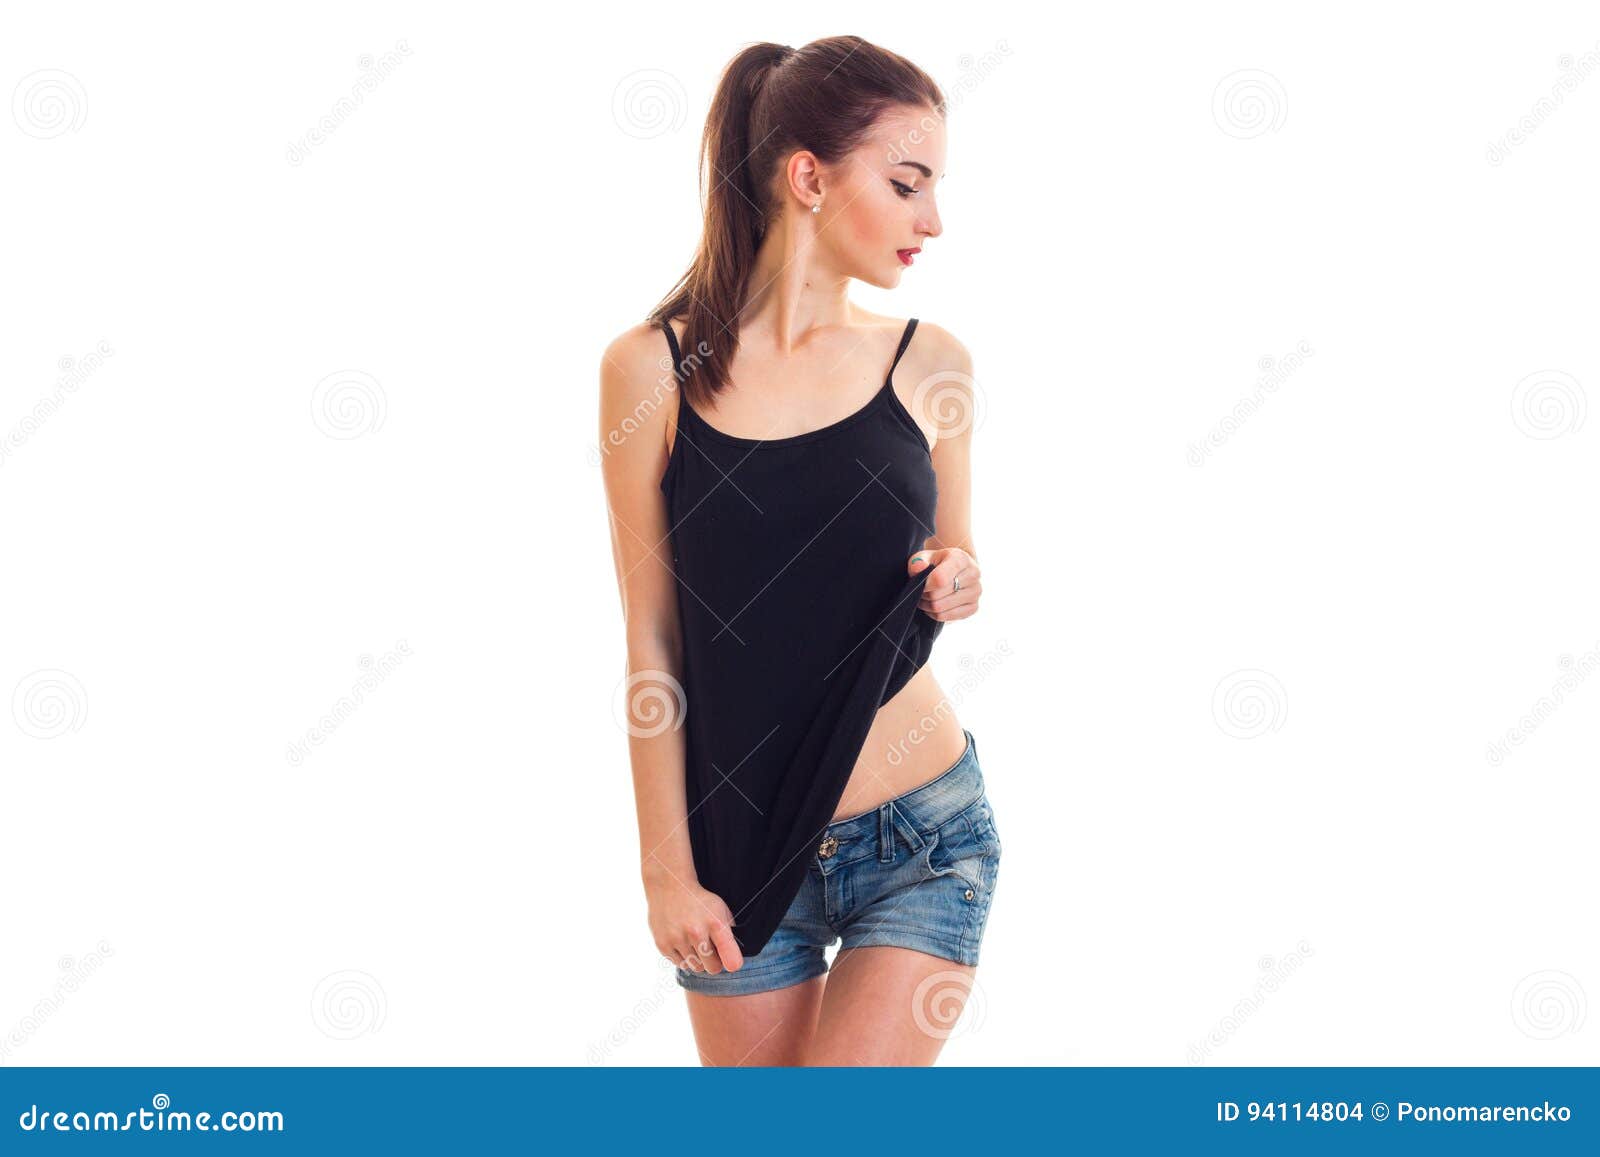 Hot Girl Unbuttons Jacket Without Bra Stock Photo 668789083